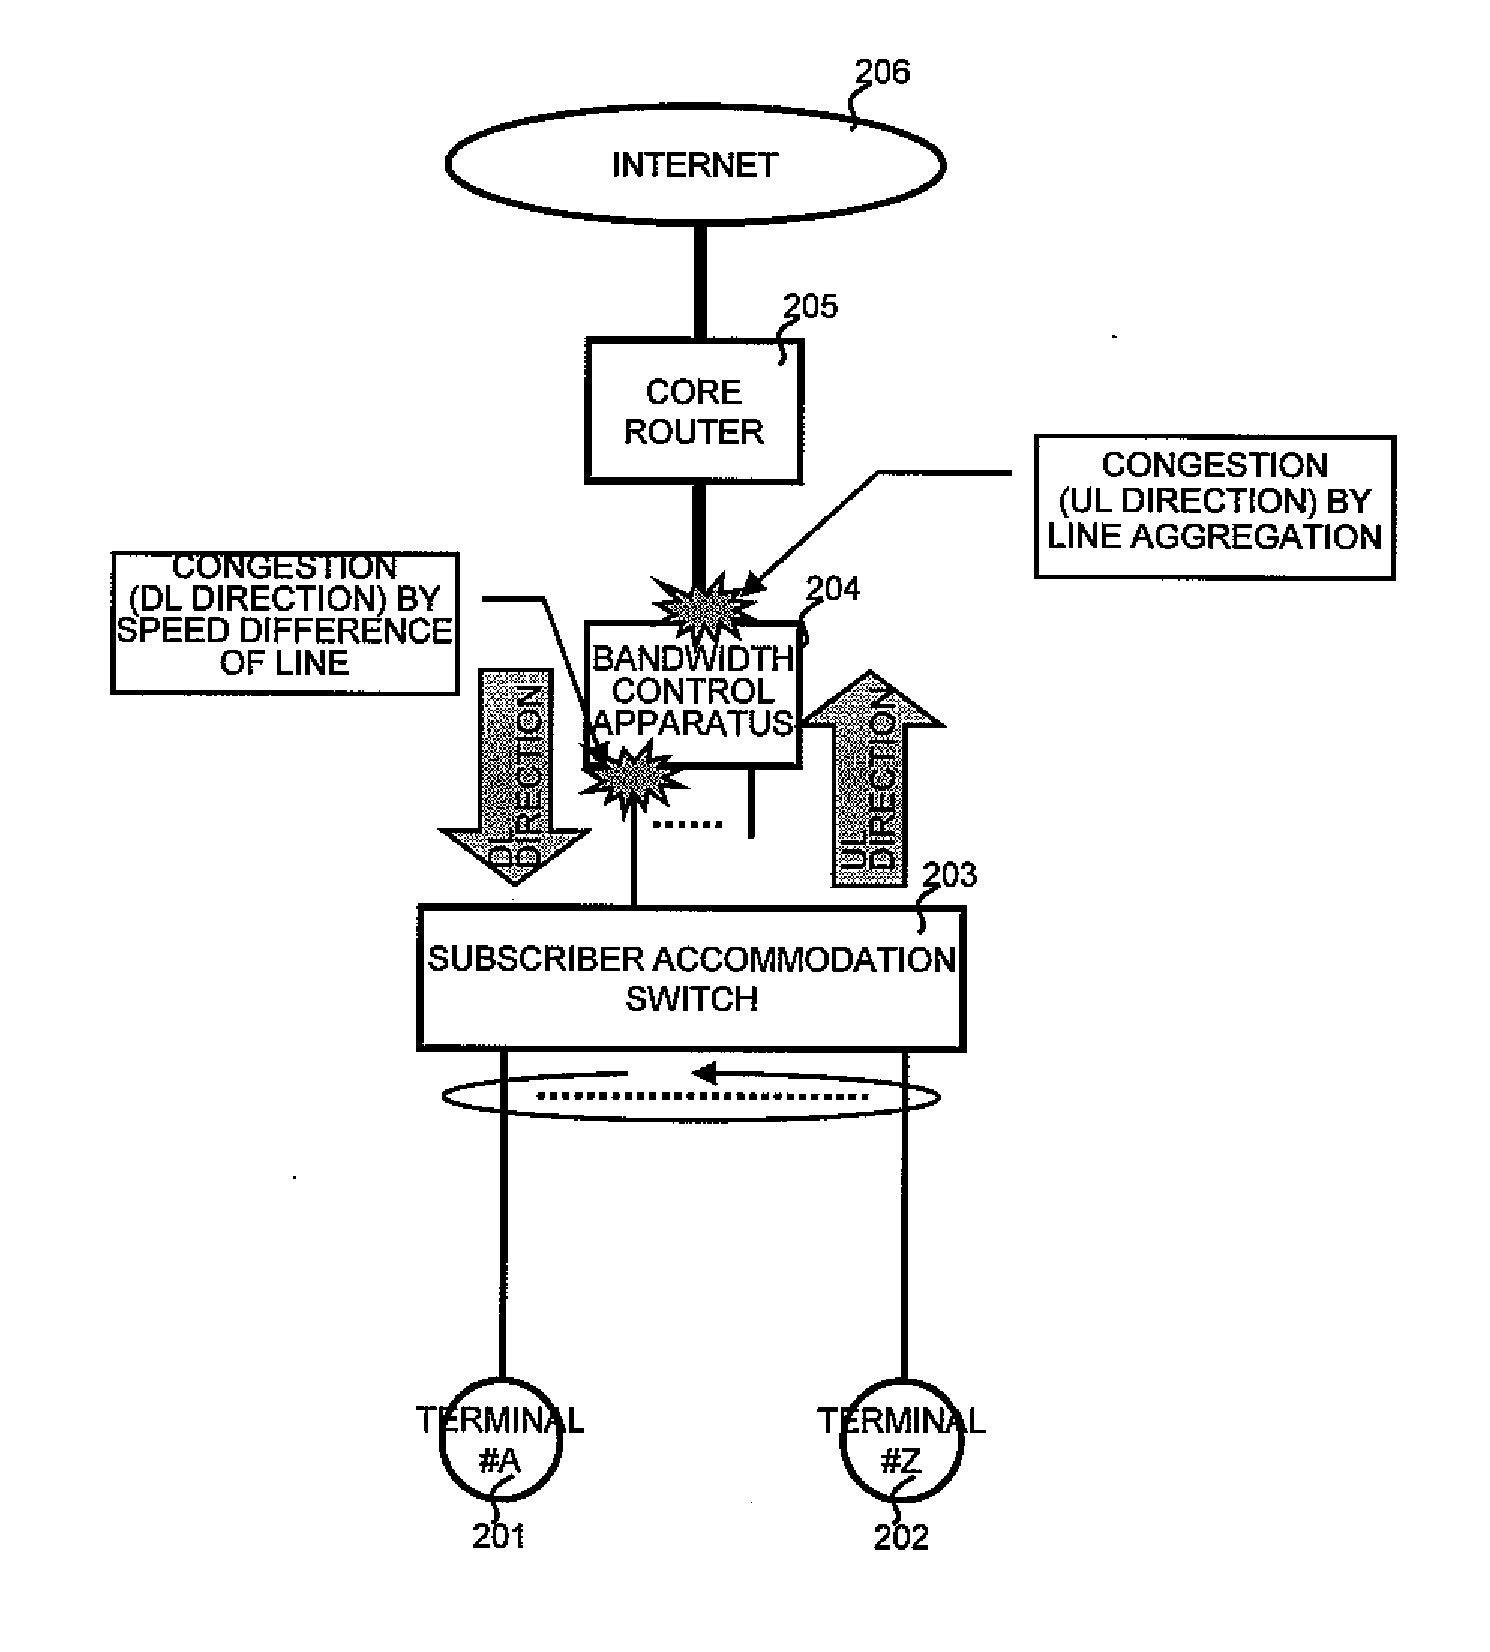 Bandwidth control apparatus